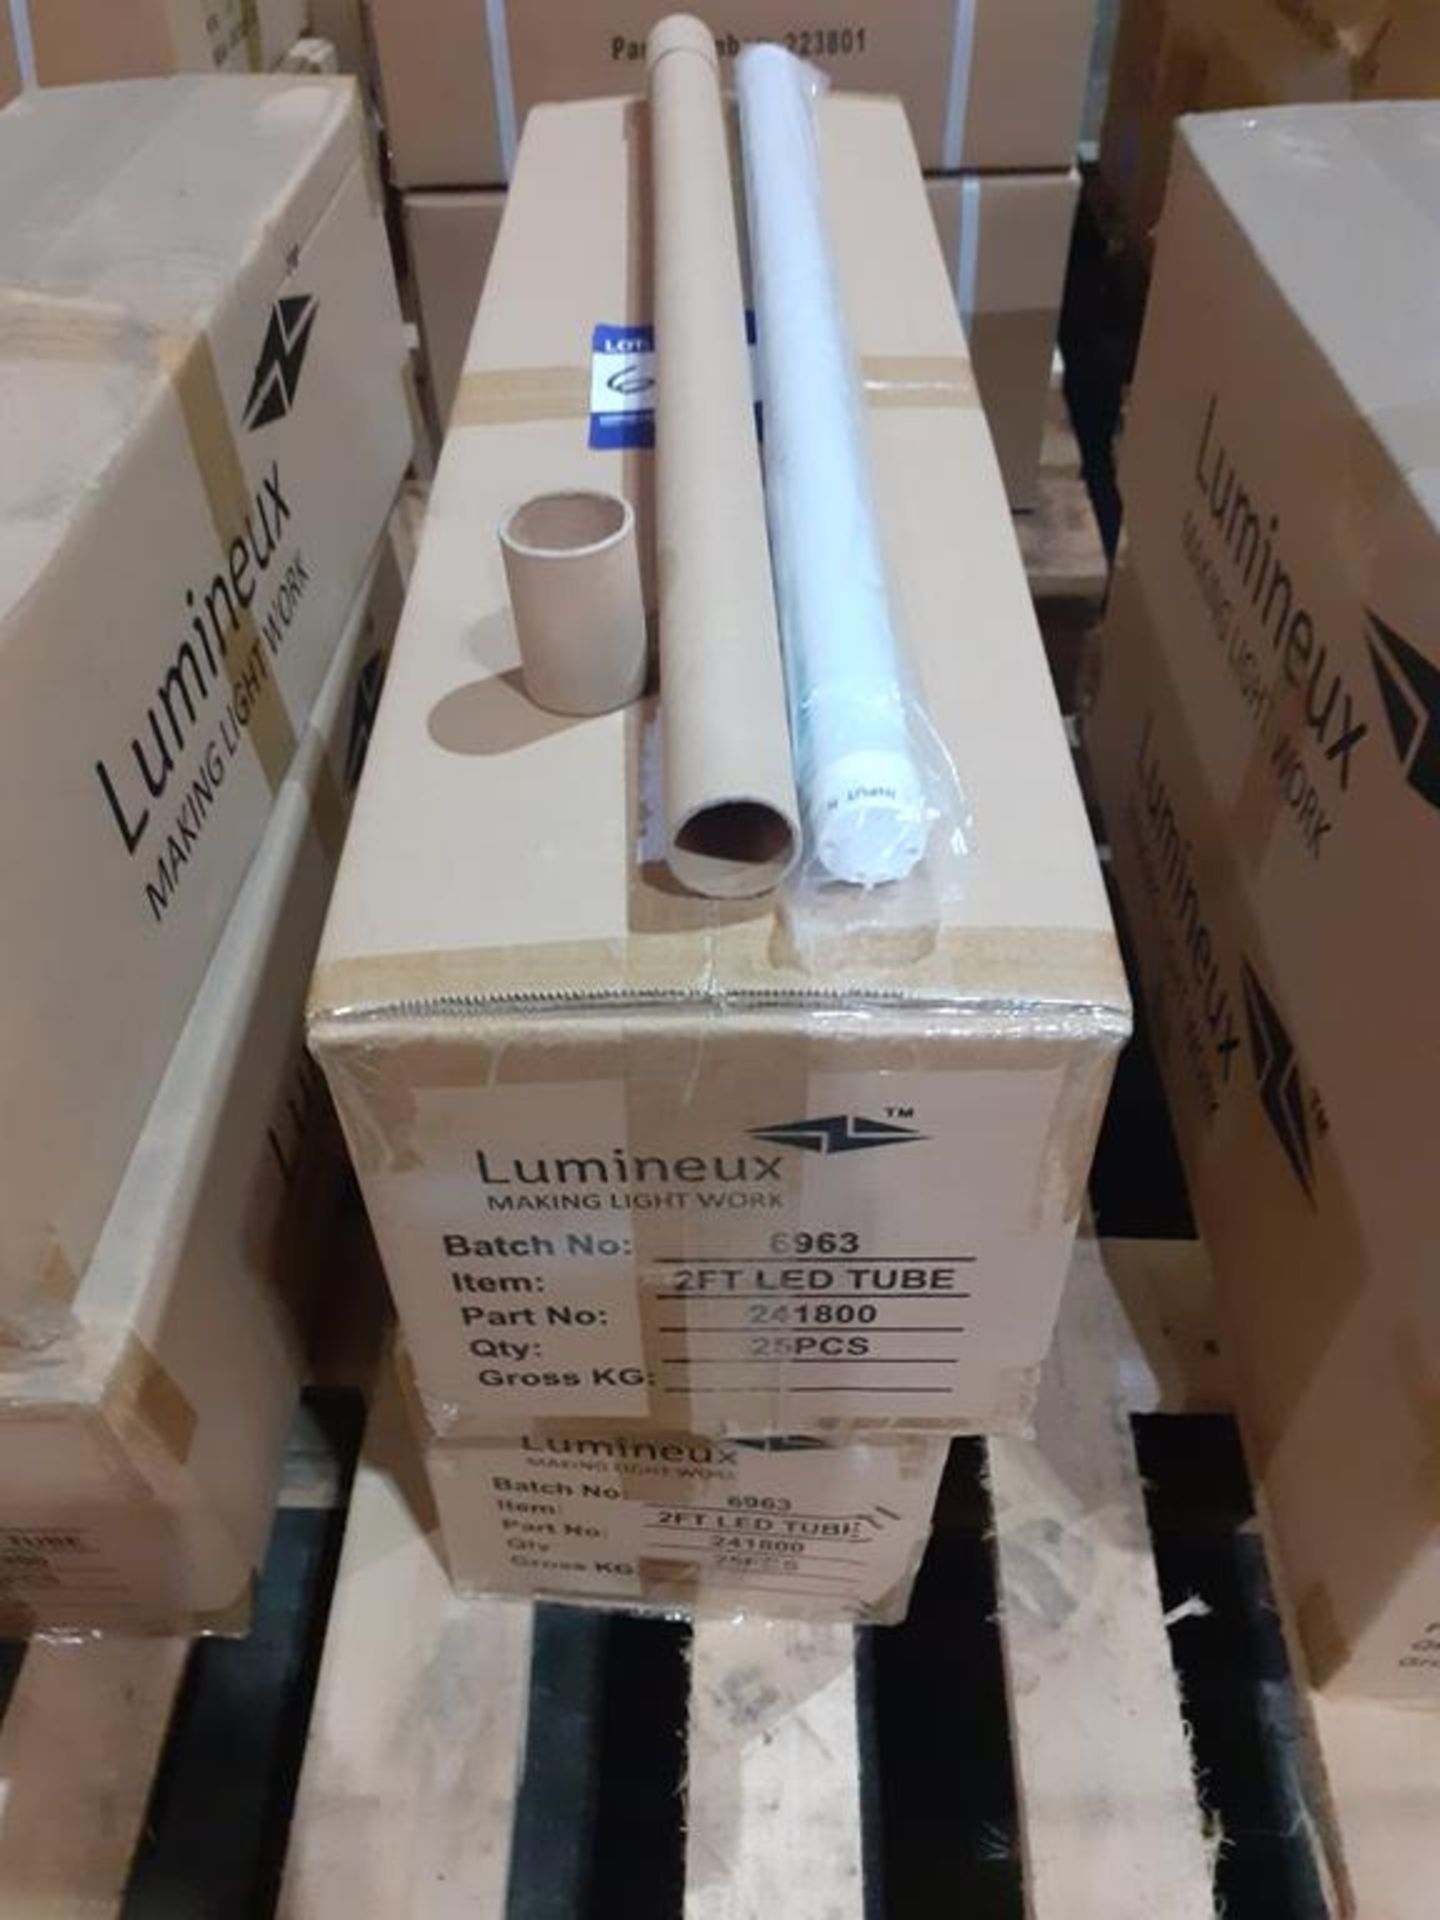 50 x Lumineux 2ft LED Tube 10W 4000K 1050lm 85-265V OEM Trade Price £367 - Image 2 of 4